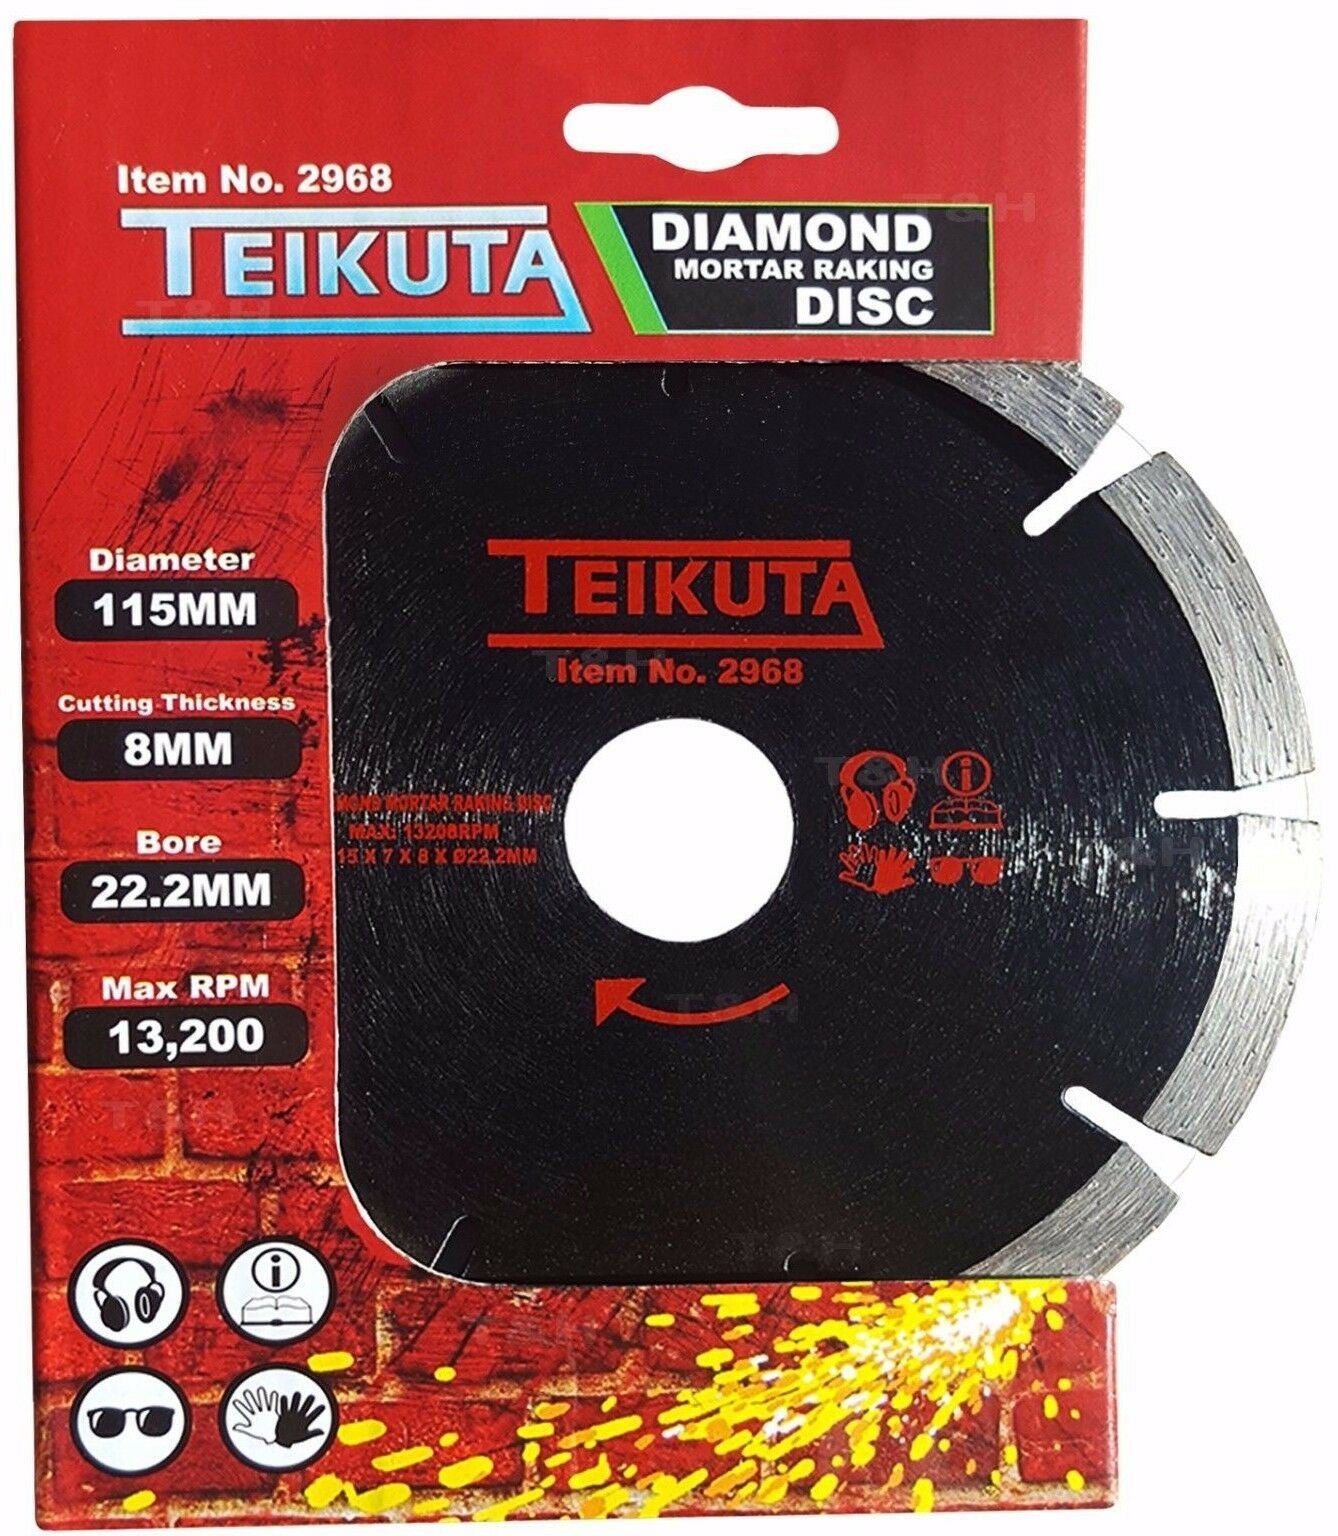 TEIKUTA 4.5" ( 115MM ) DIAMOND MORTAR RAKING DISC ( X 1 )